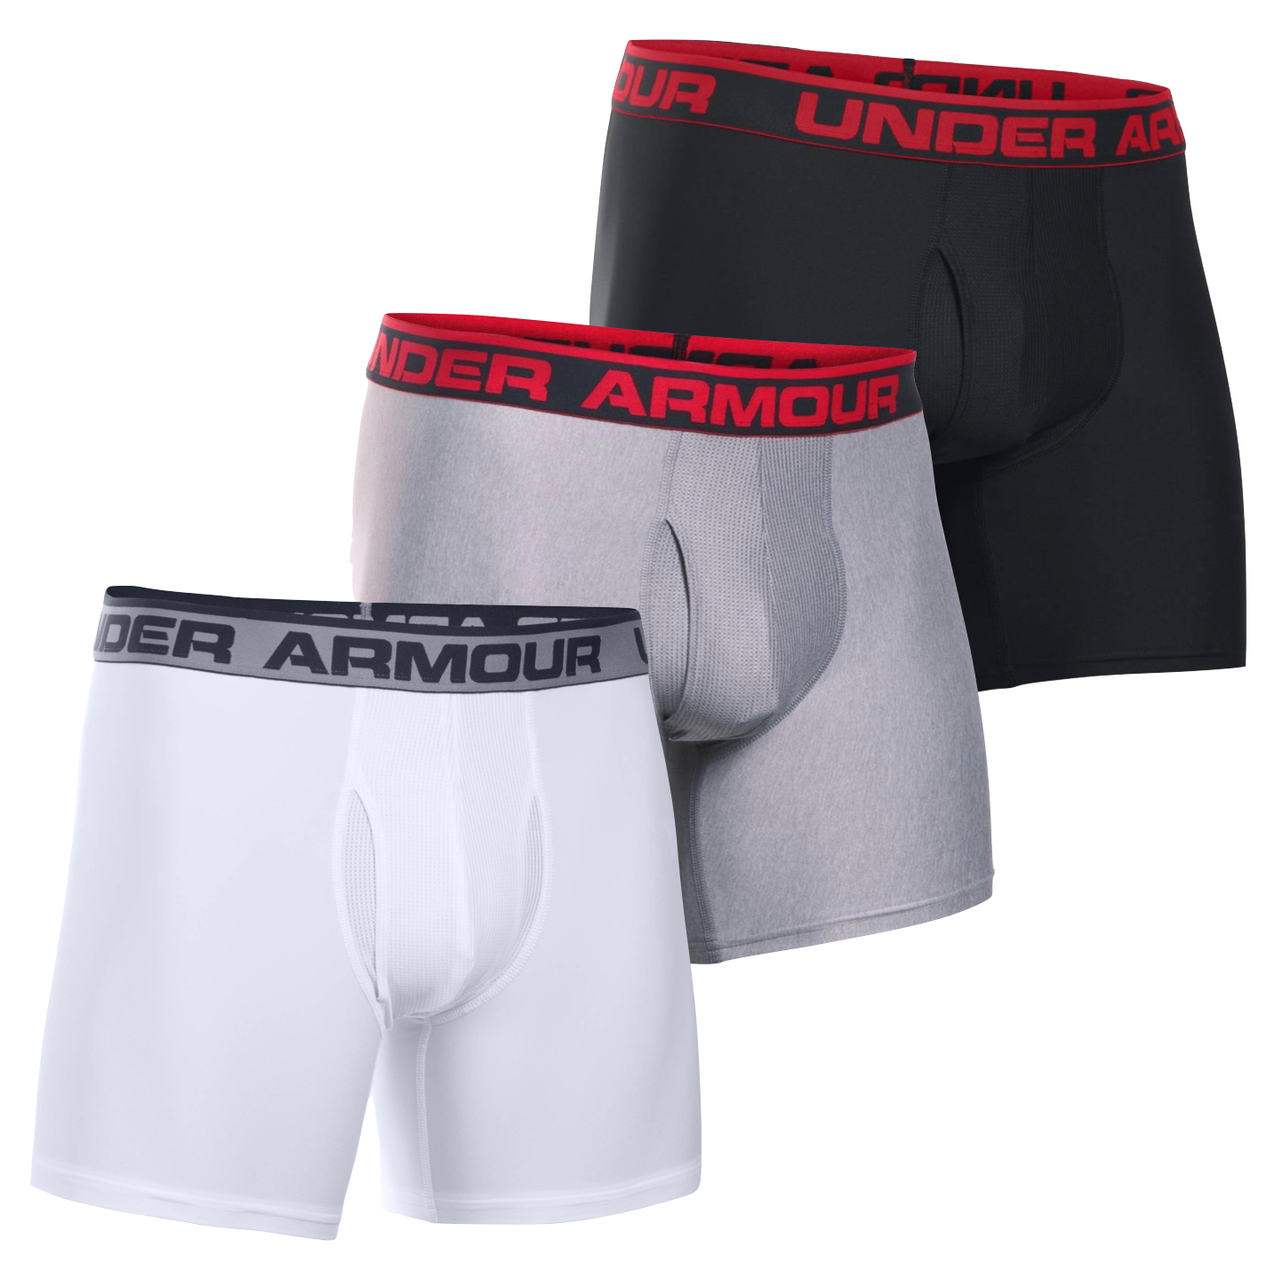 under armour men's original series 9'' boxerjock boxer briefs 2 pack 